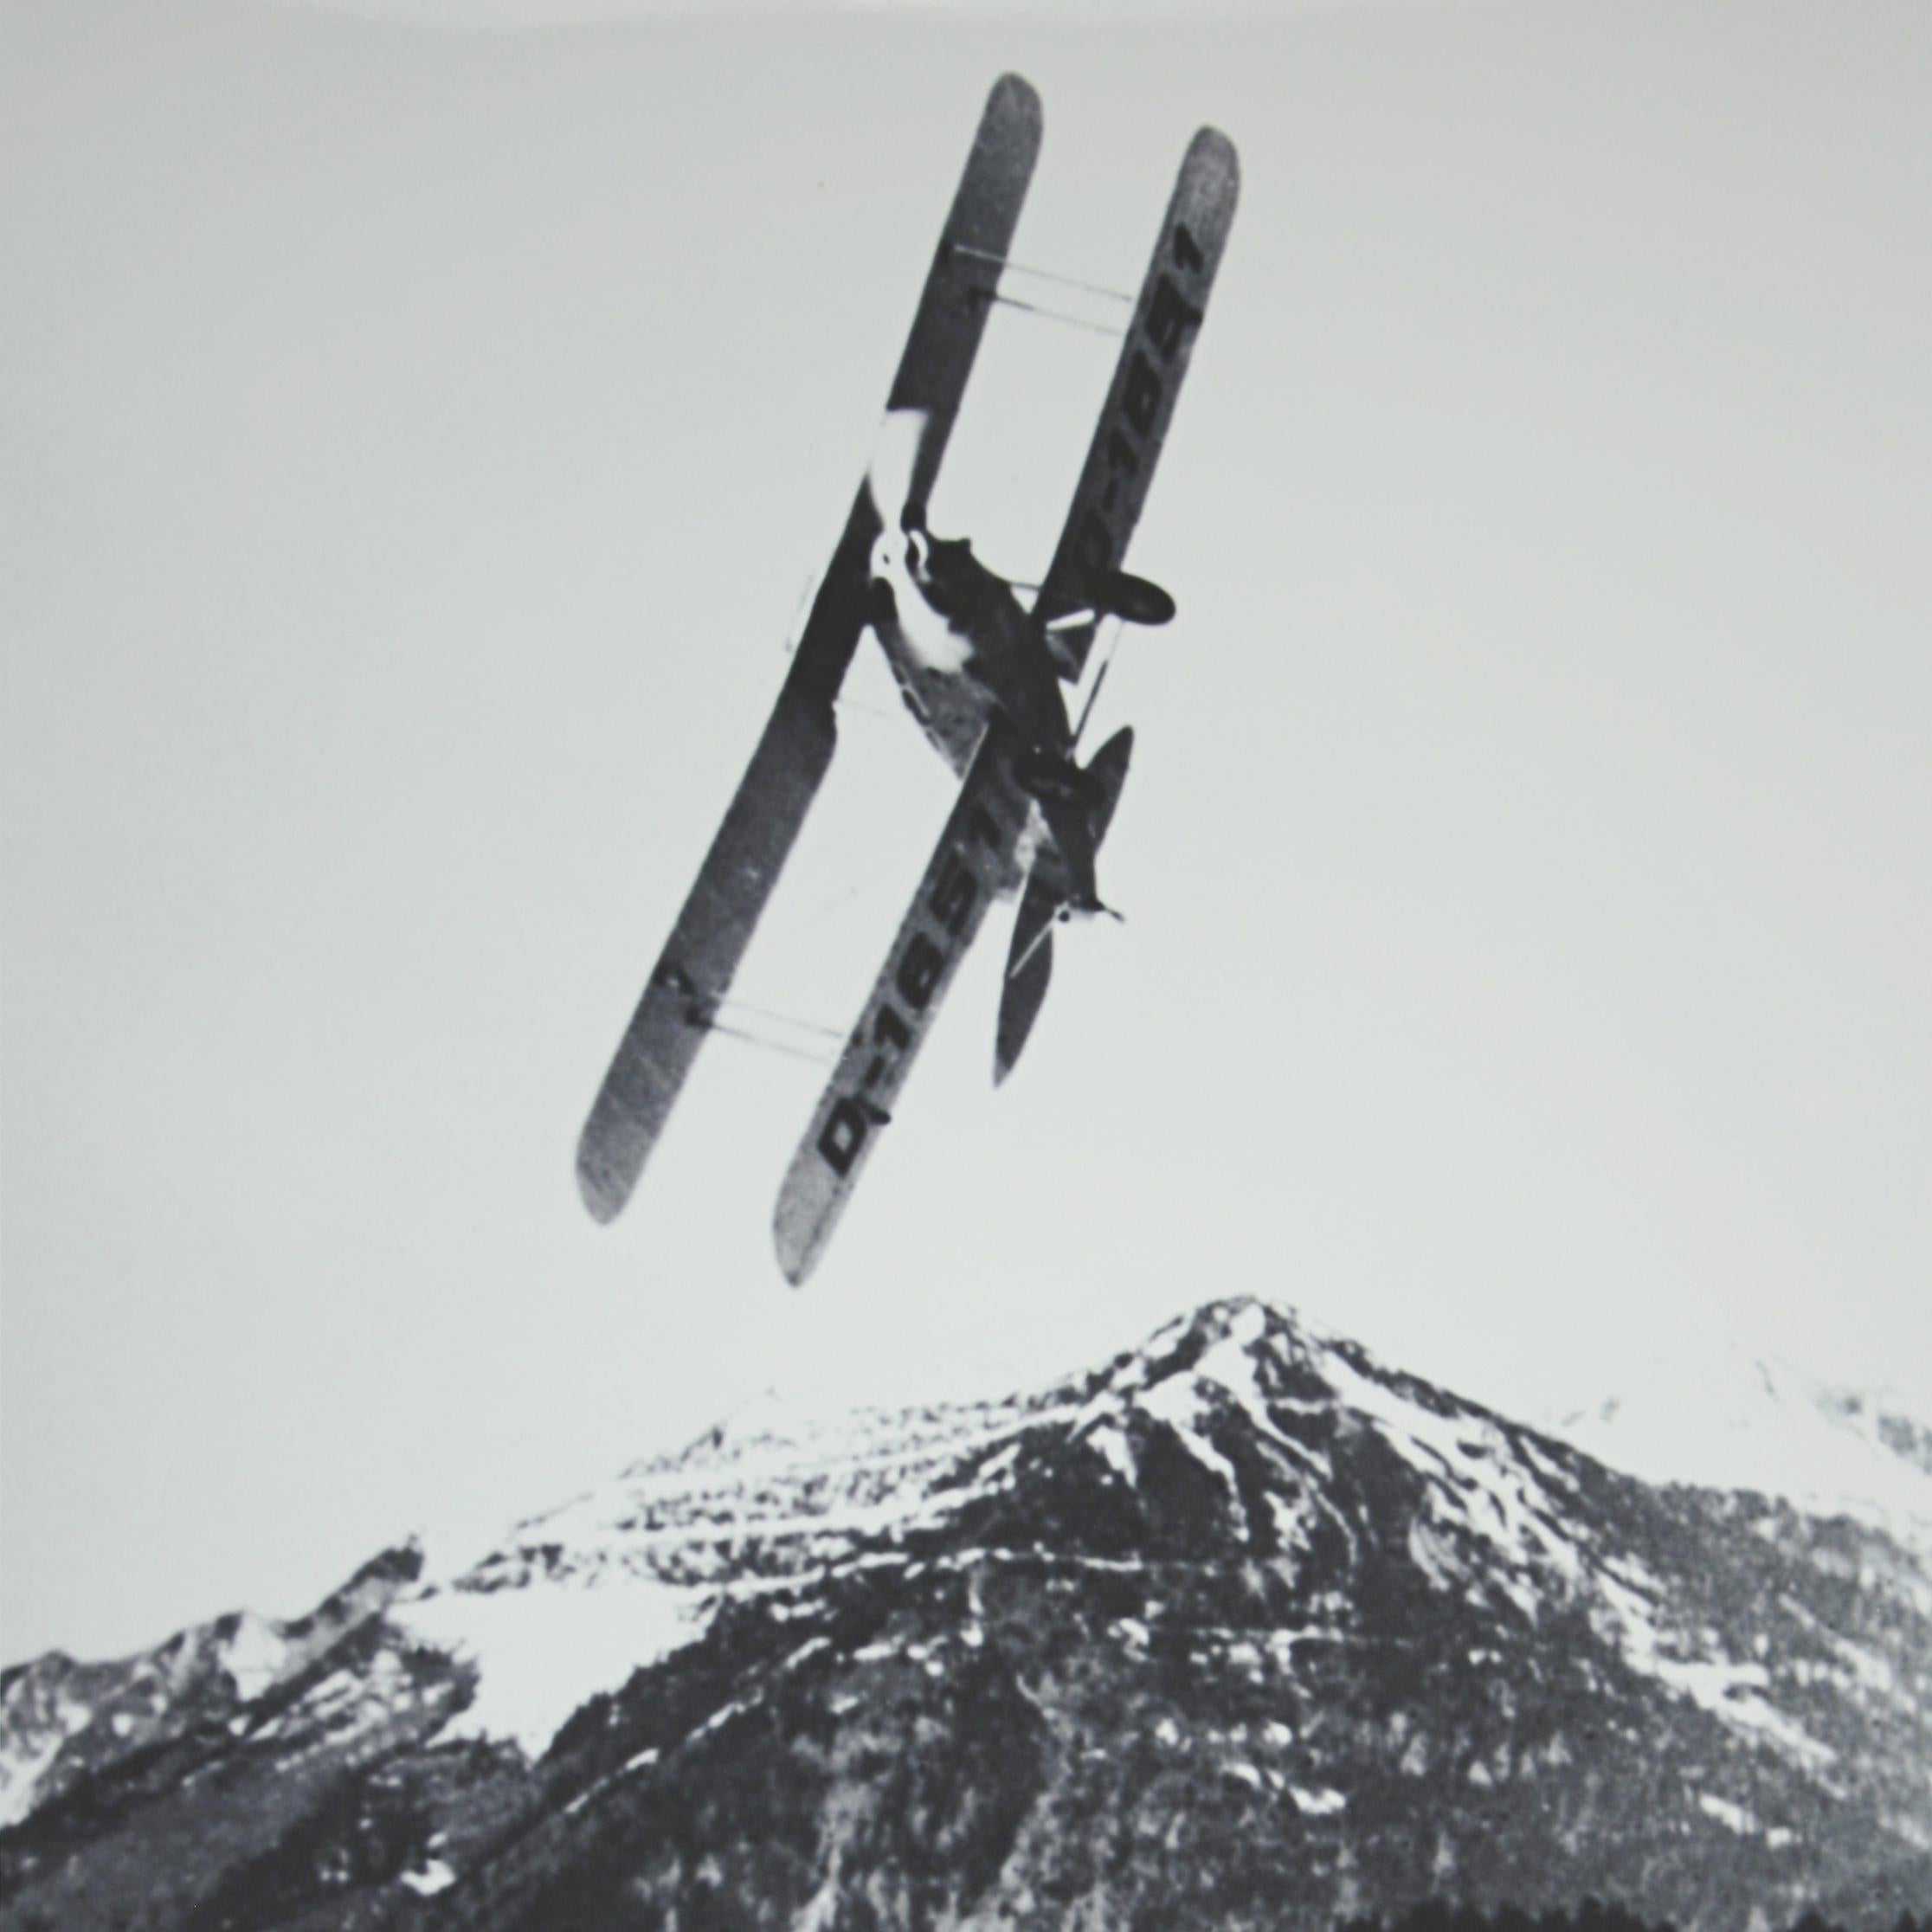 British Alpine Ski Photograph, 'The Race' Taken from Original 1930s Photograph For Sale